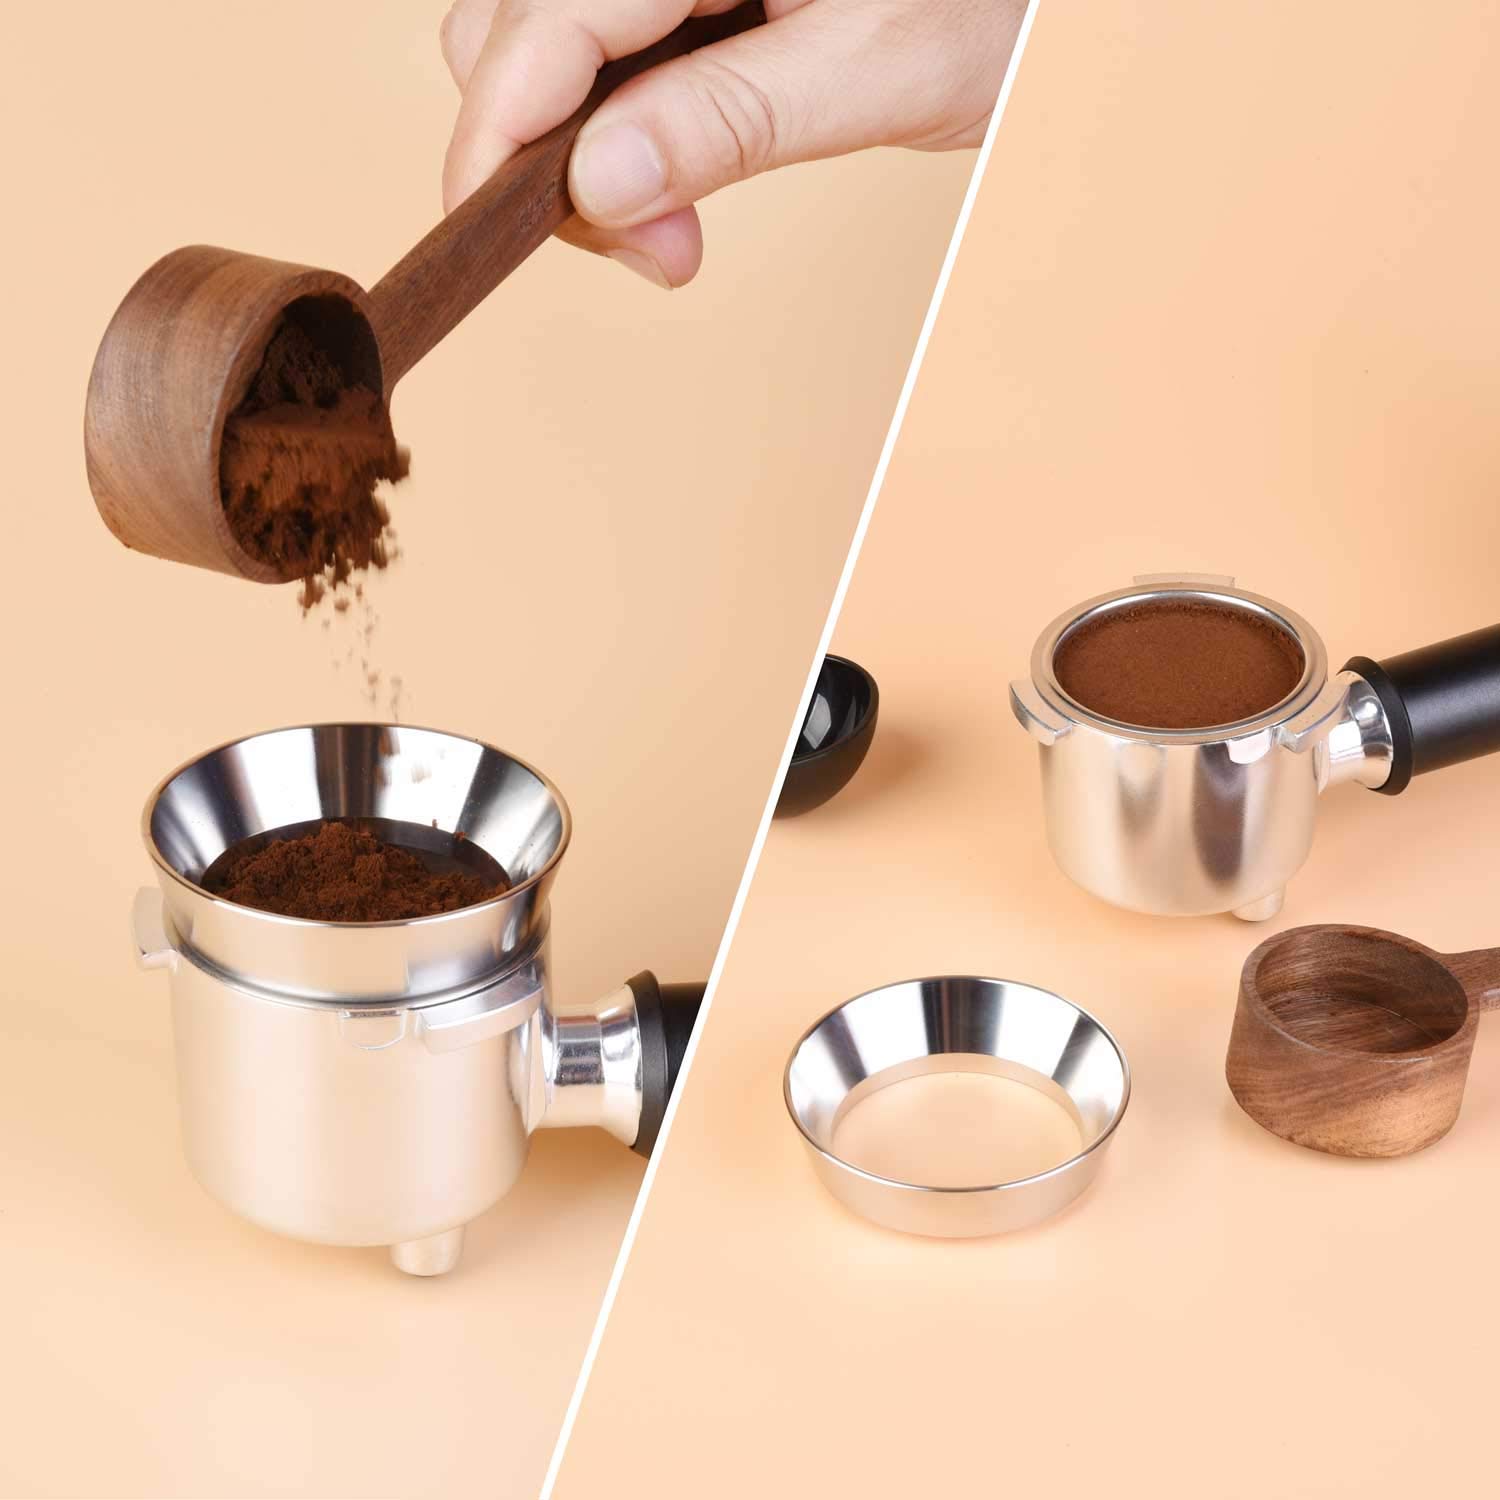 Mua 51mm Espresso Dosing Funnel, MATOW Stainless Steel Coffee Dosing Ring Compatible with 51mm Portafilter (51mm) trên Amazon Mỹ chính hãng 2022 | Fado